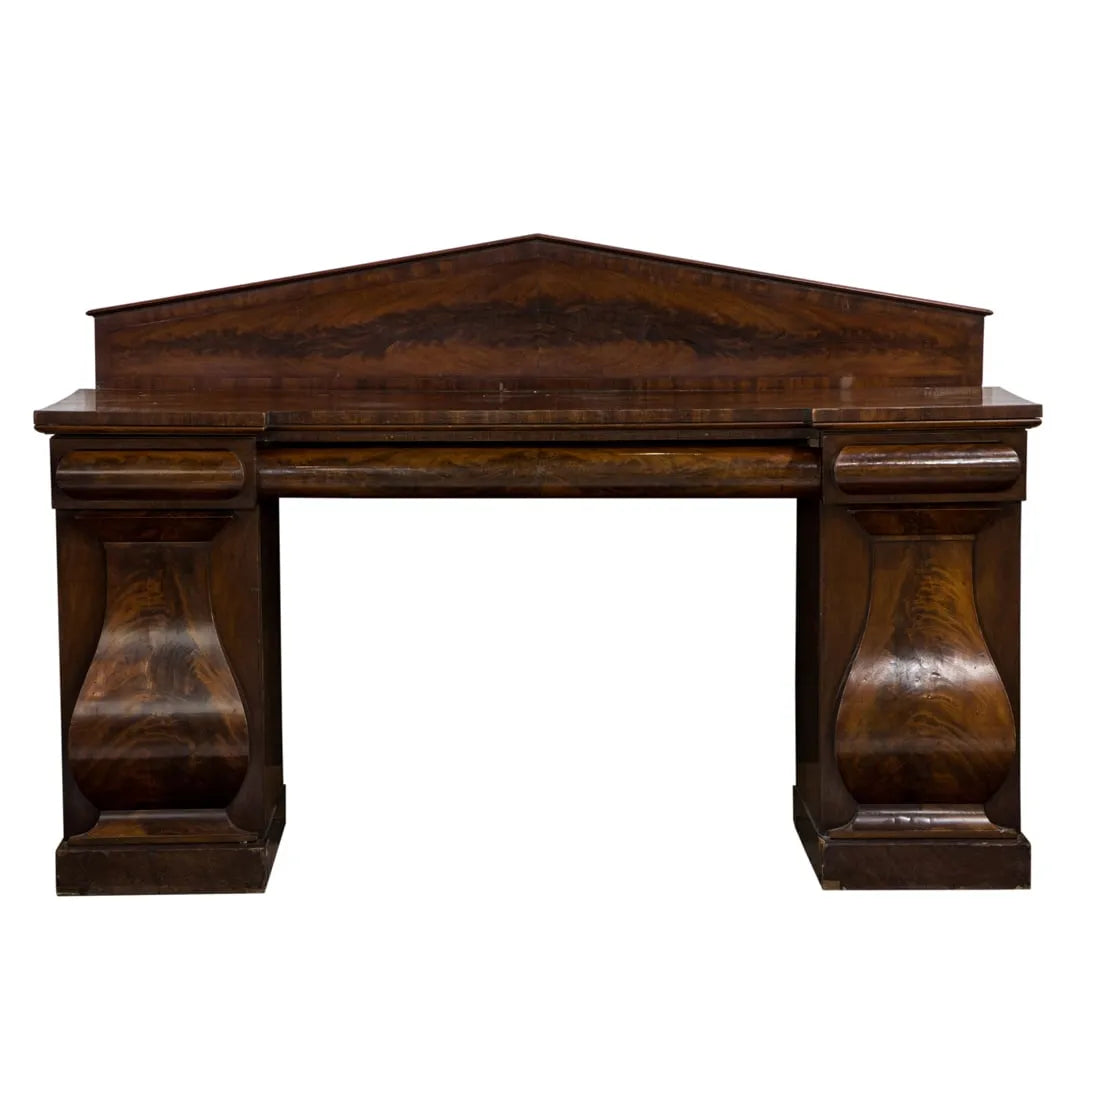 AF3-055: Antique Circa 1830 English William IV Double Pedestal Mahogany Sideboard